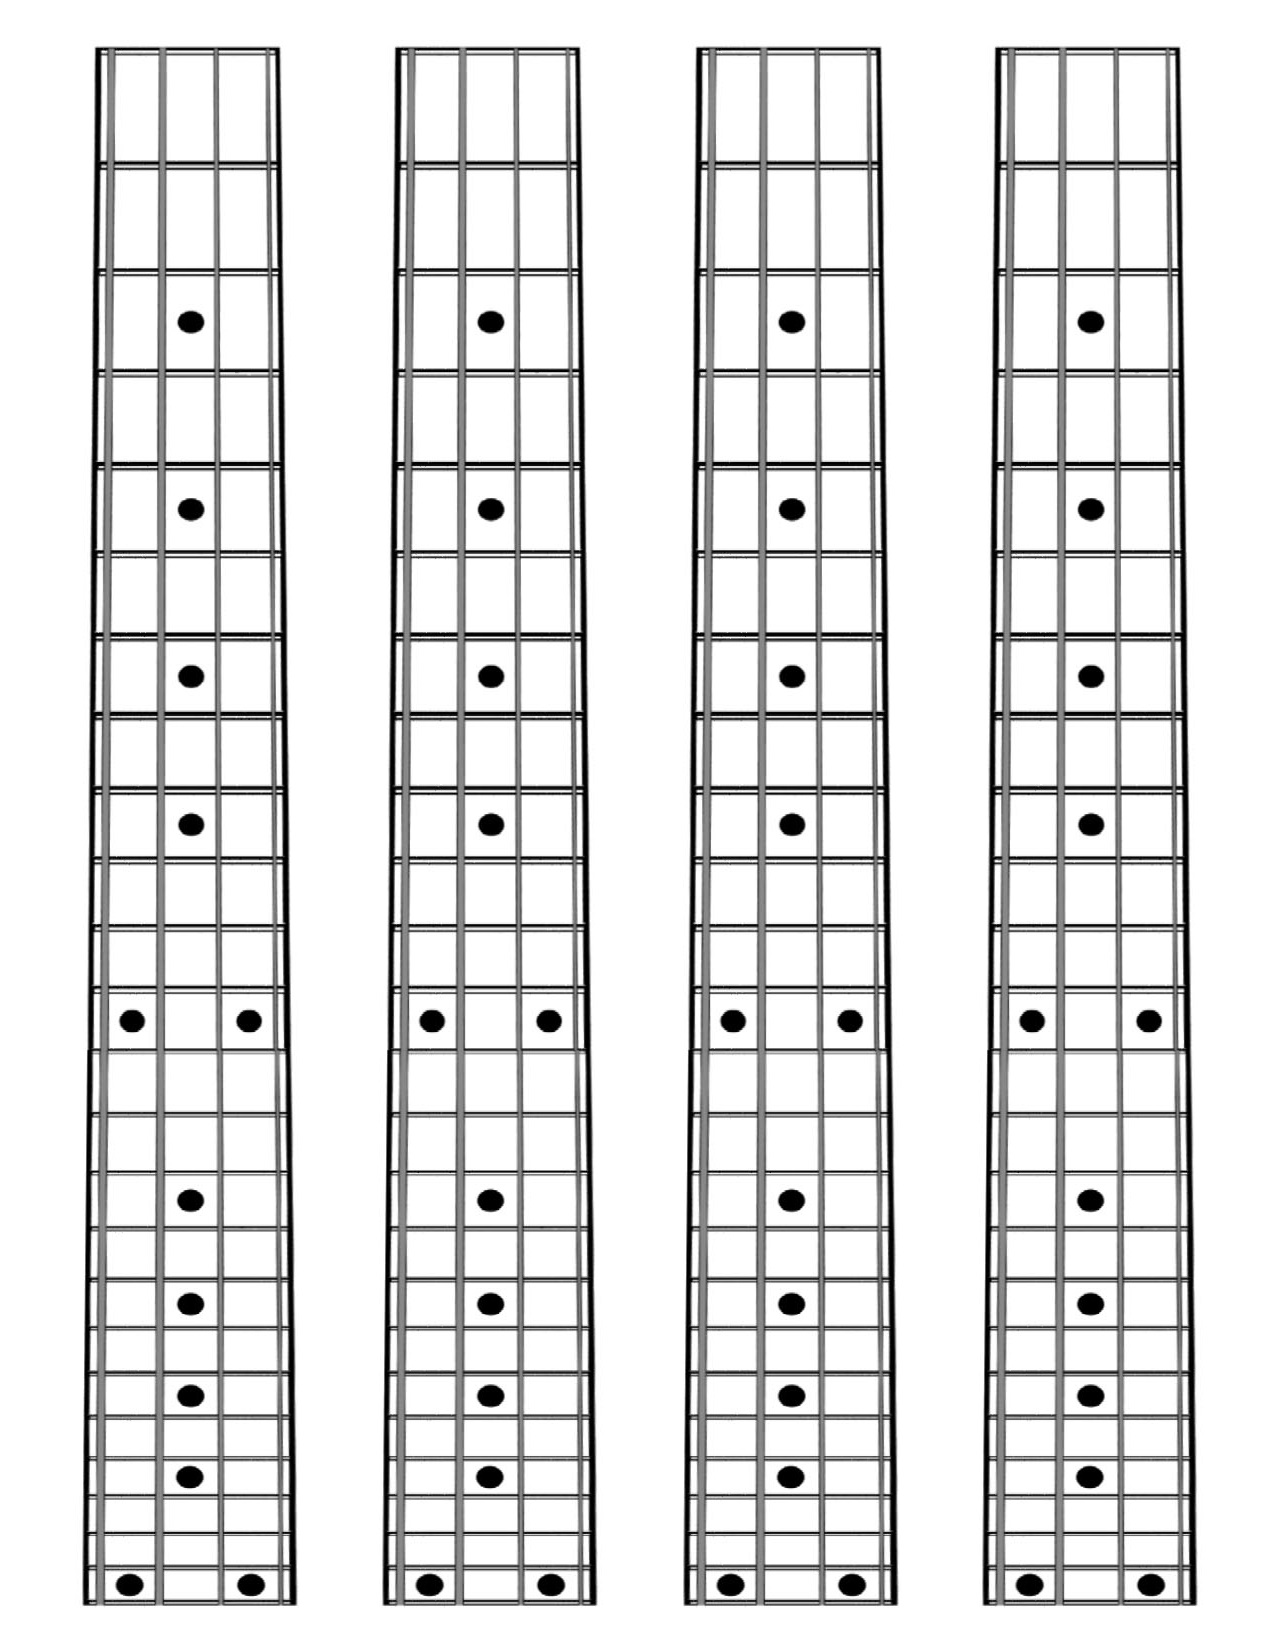 Guitar Fretboard Diagram Printable Vrogue Co